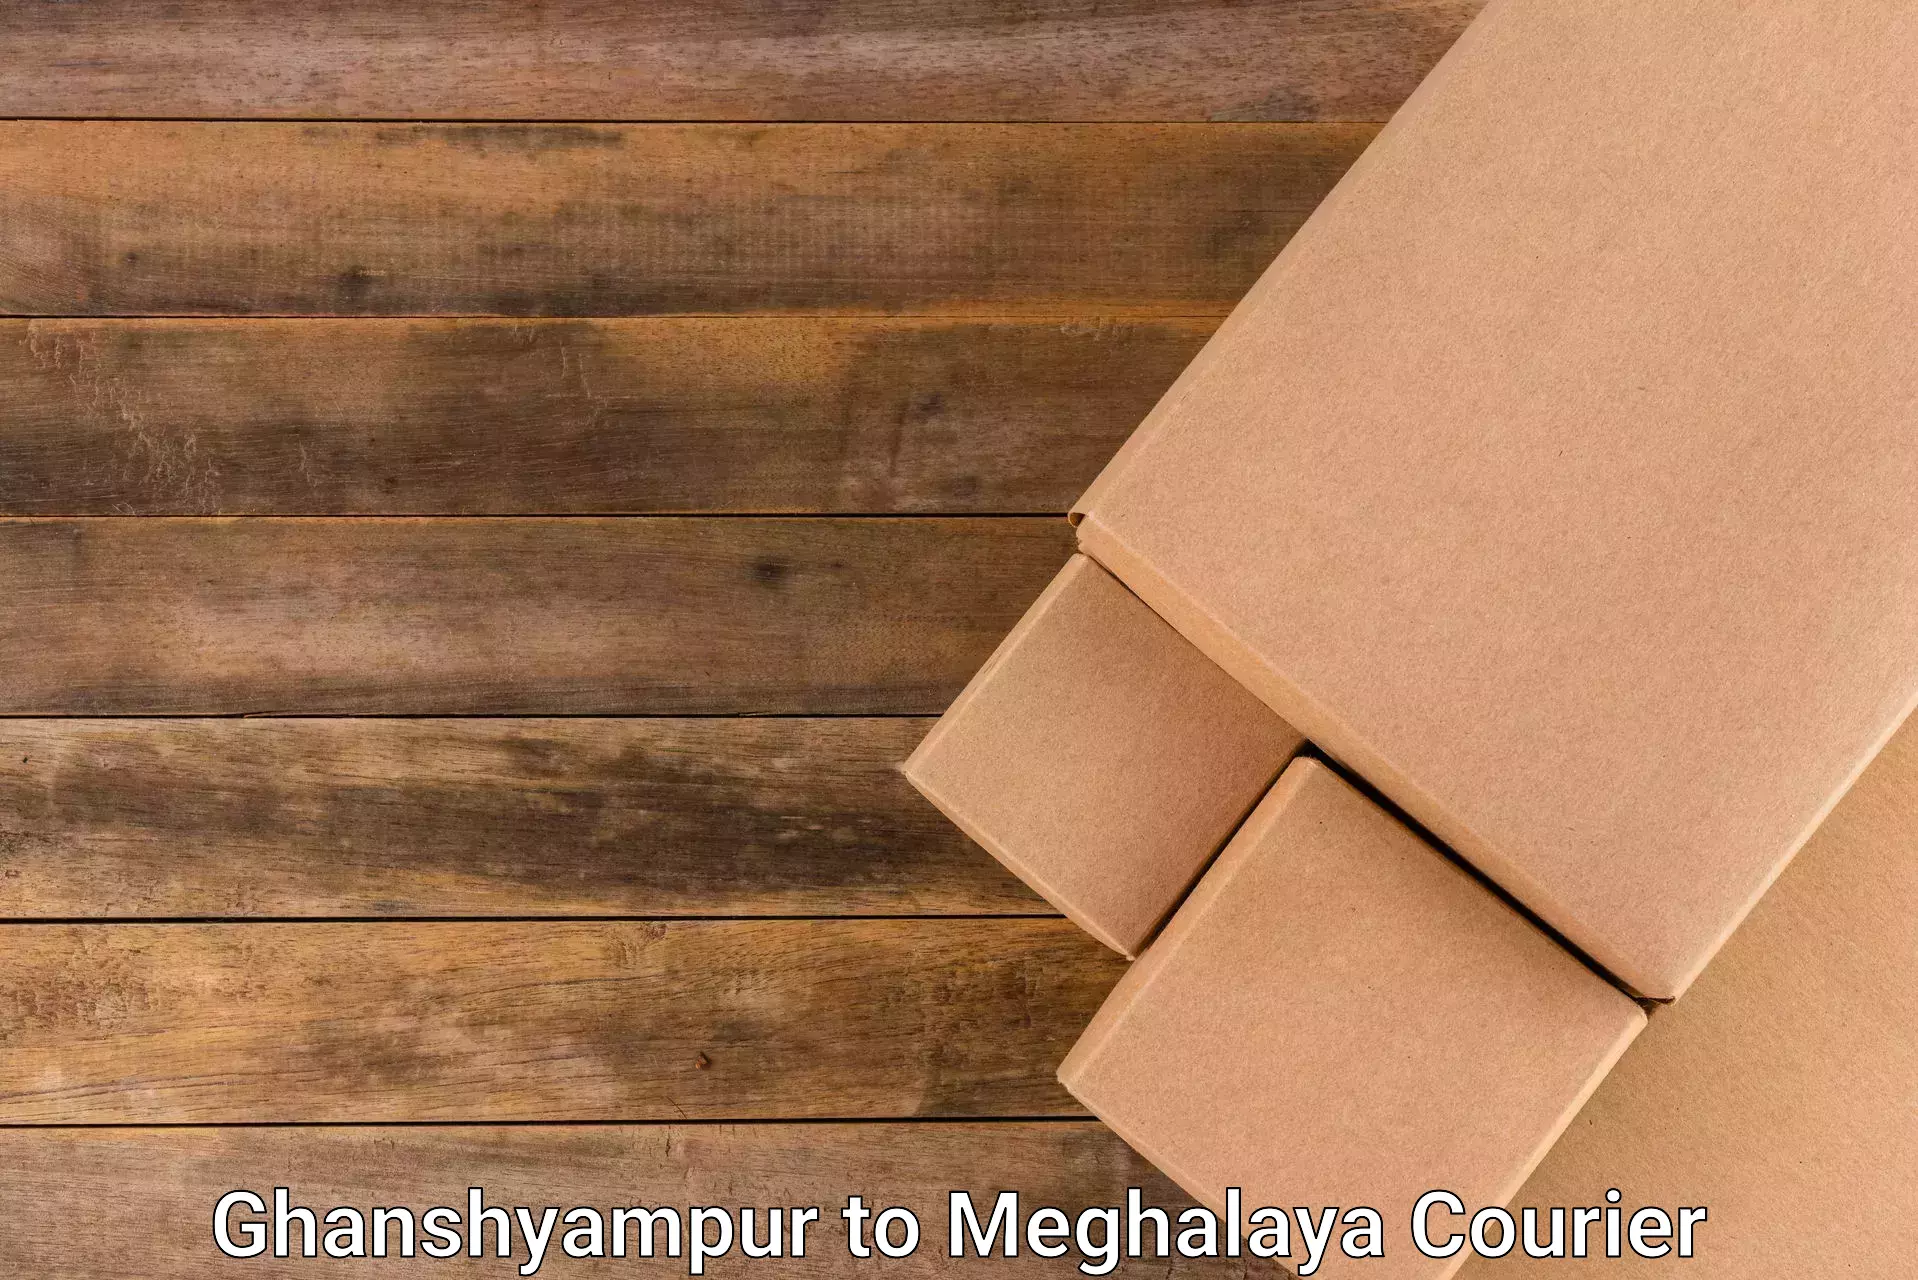 Logistics service provider Ghanshyampur to Meghalaya